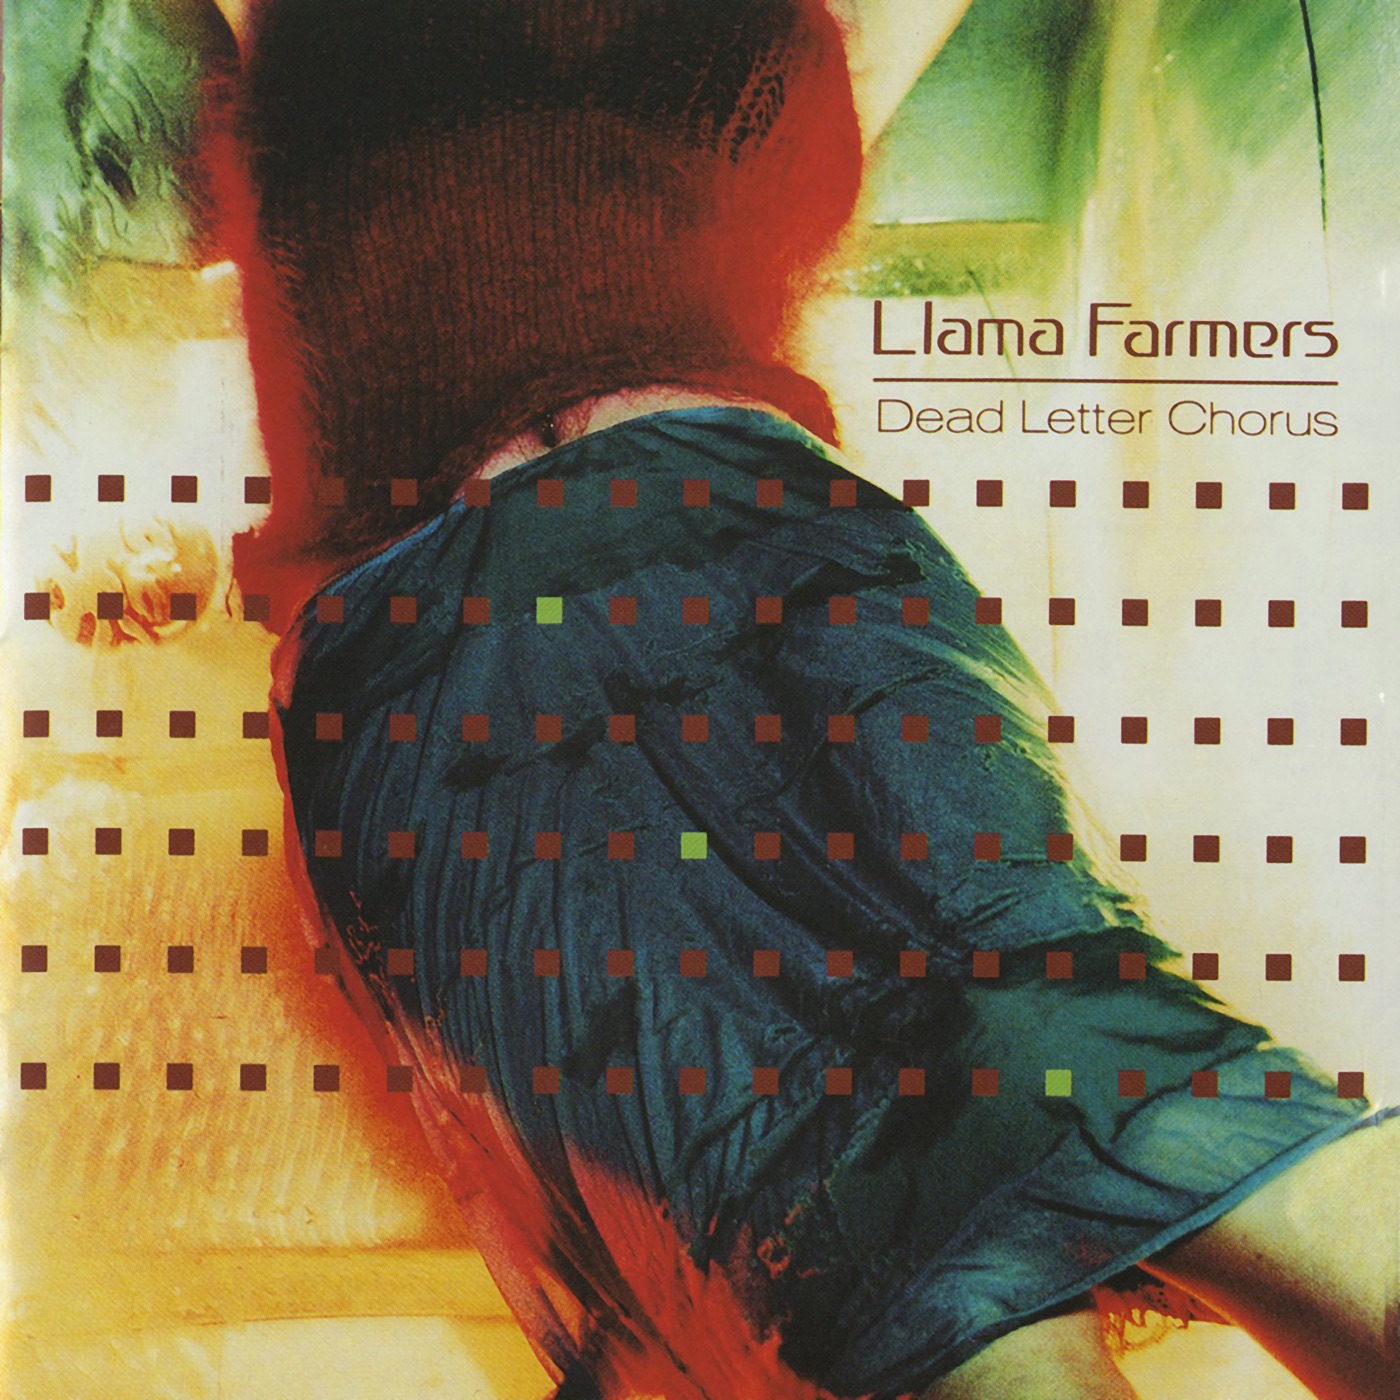 Dead Letter Chorus by Llama Farmers